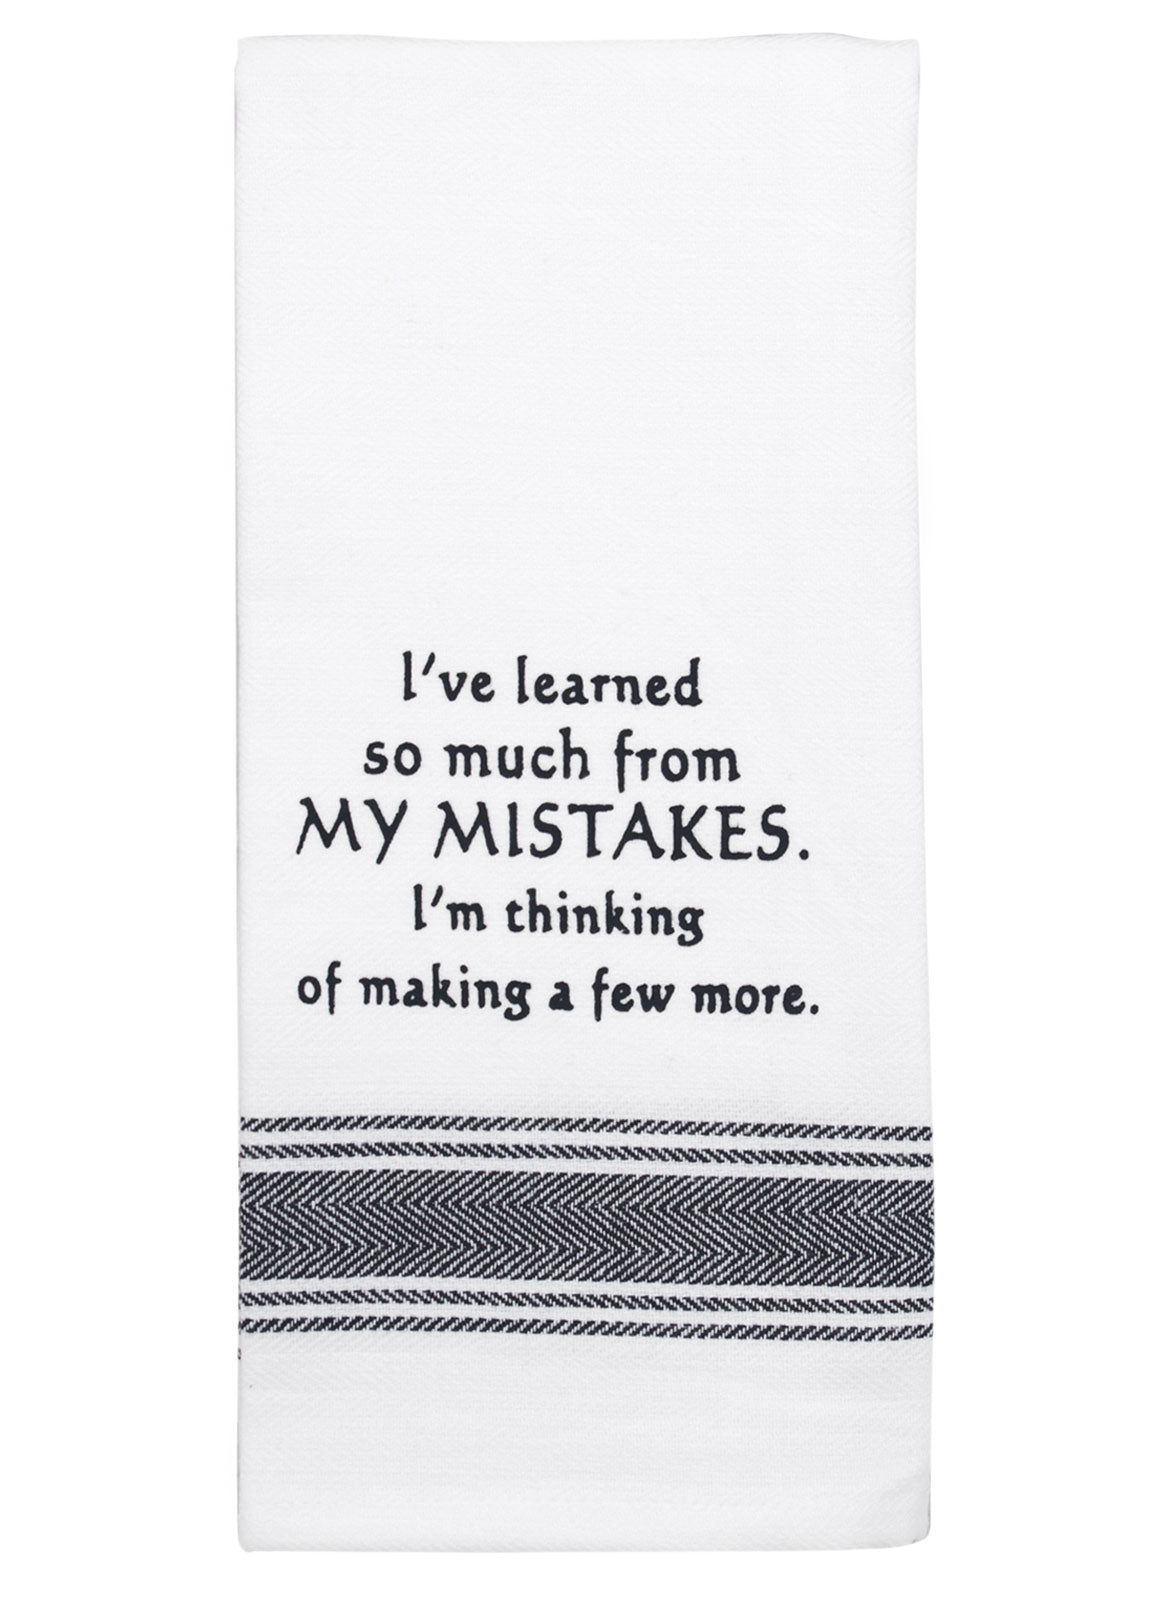 Tea Towel "My Mistakes" Saying